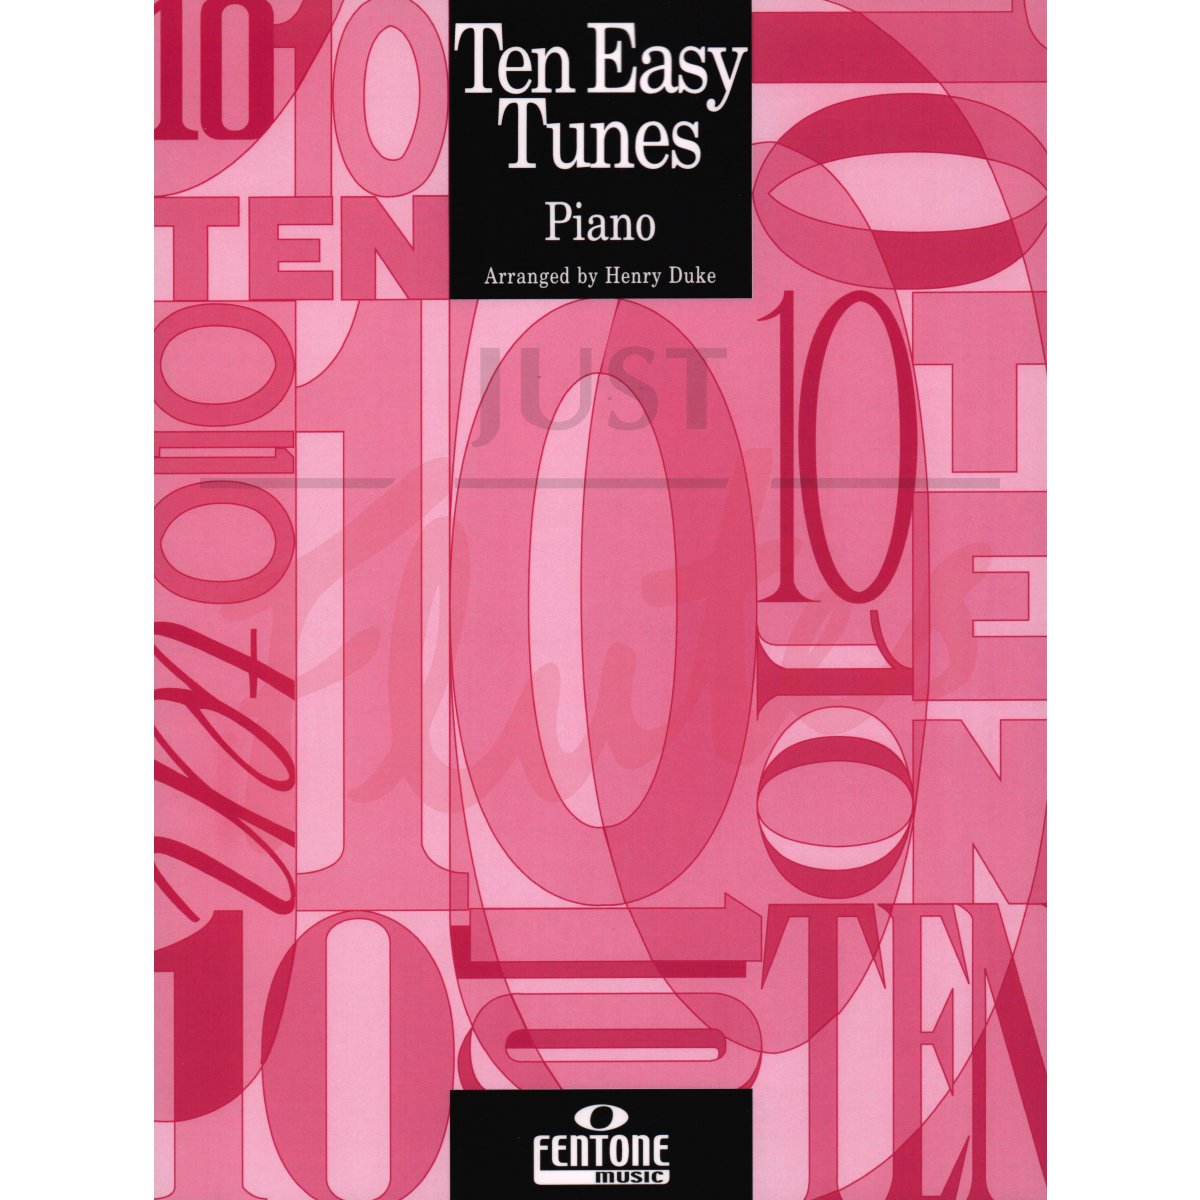 Ten Easy Tunes for Piano